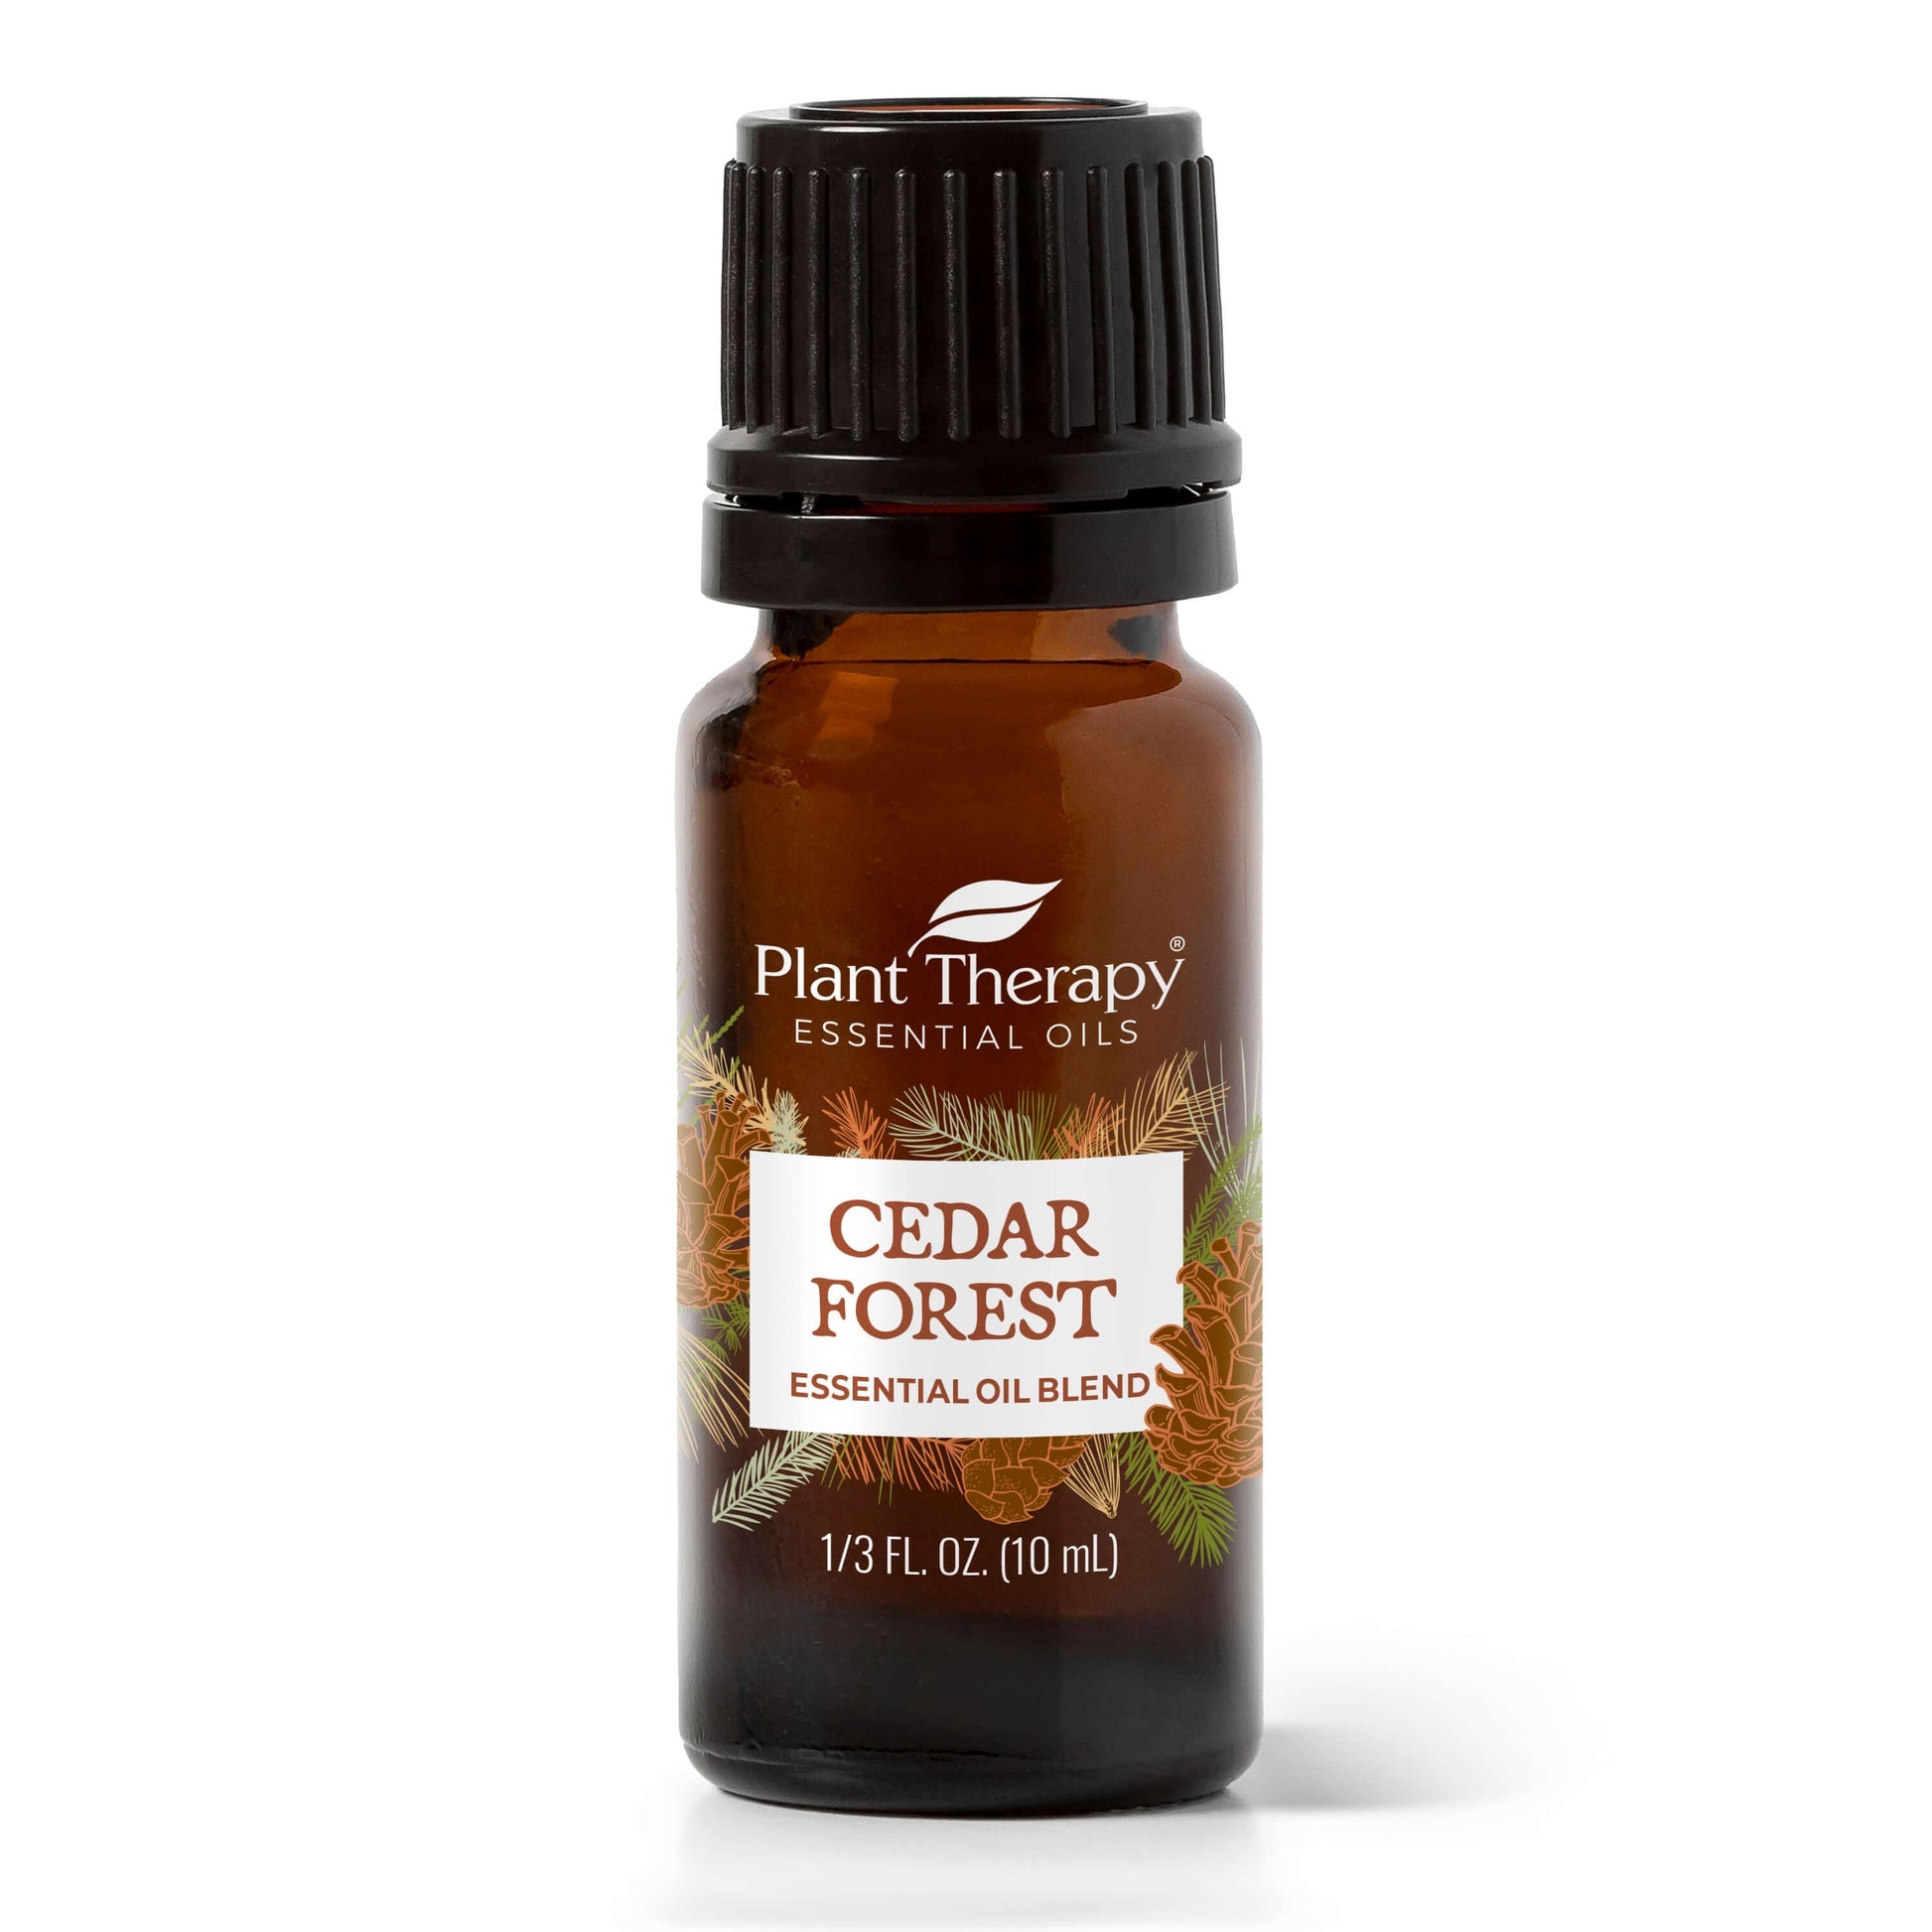  Cedar & Pine Passive Diffuser Set Plant Therapy Perfumarie